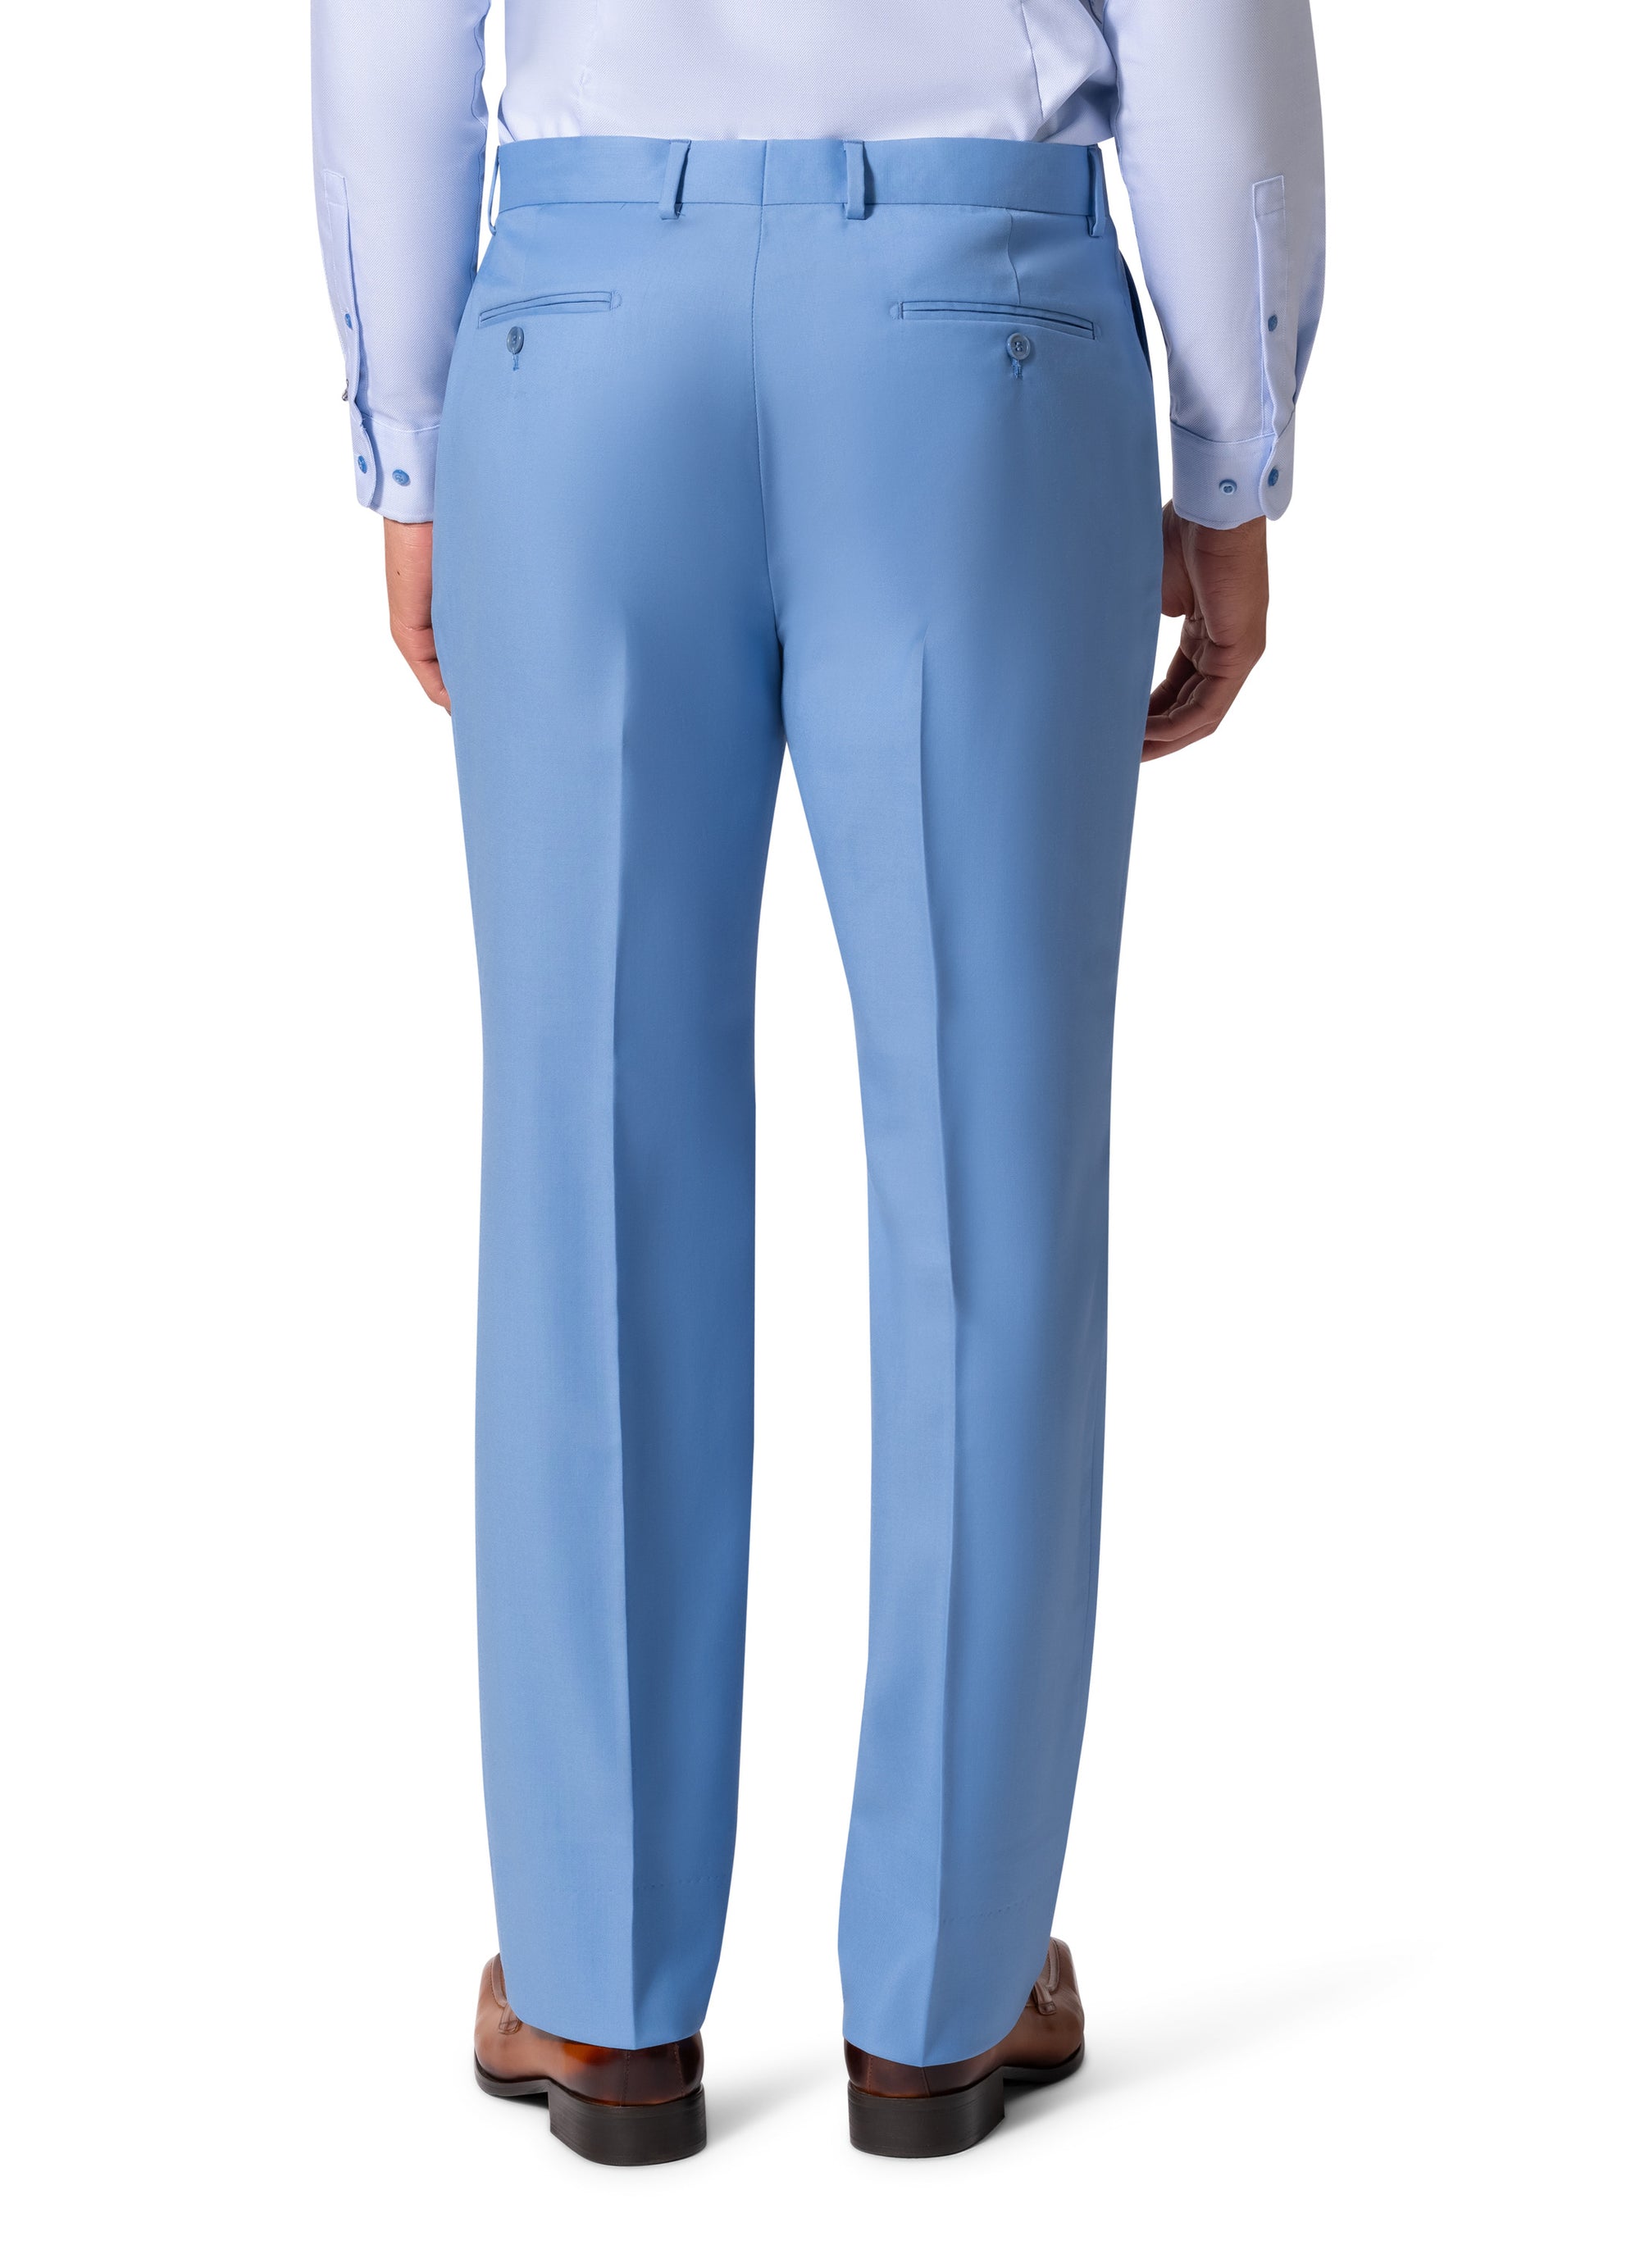 Berragamo Elegant - 10174.001 Wool Suit Modern Peak - Blue